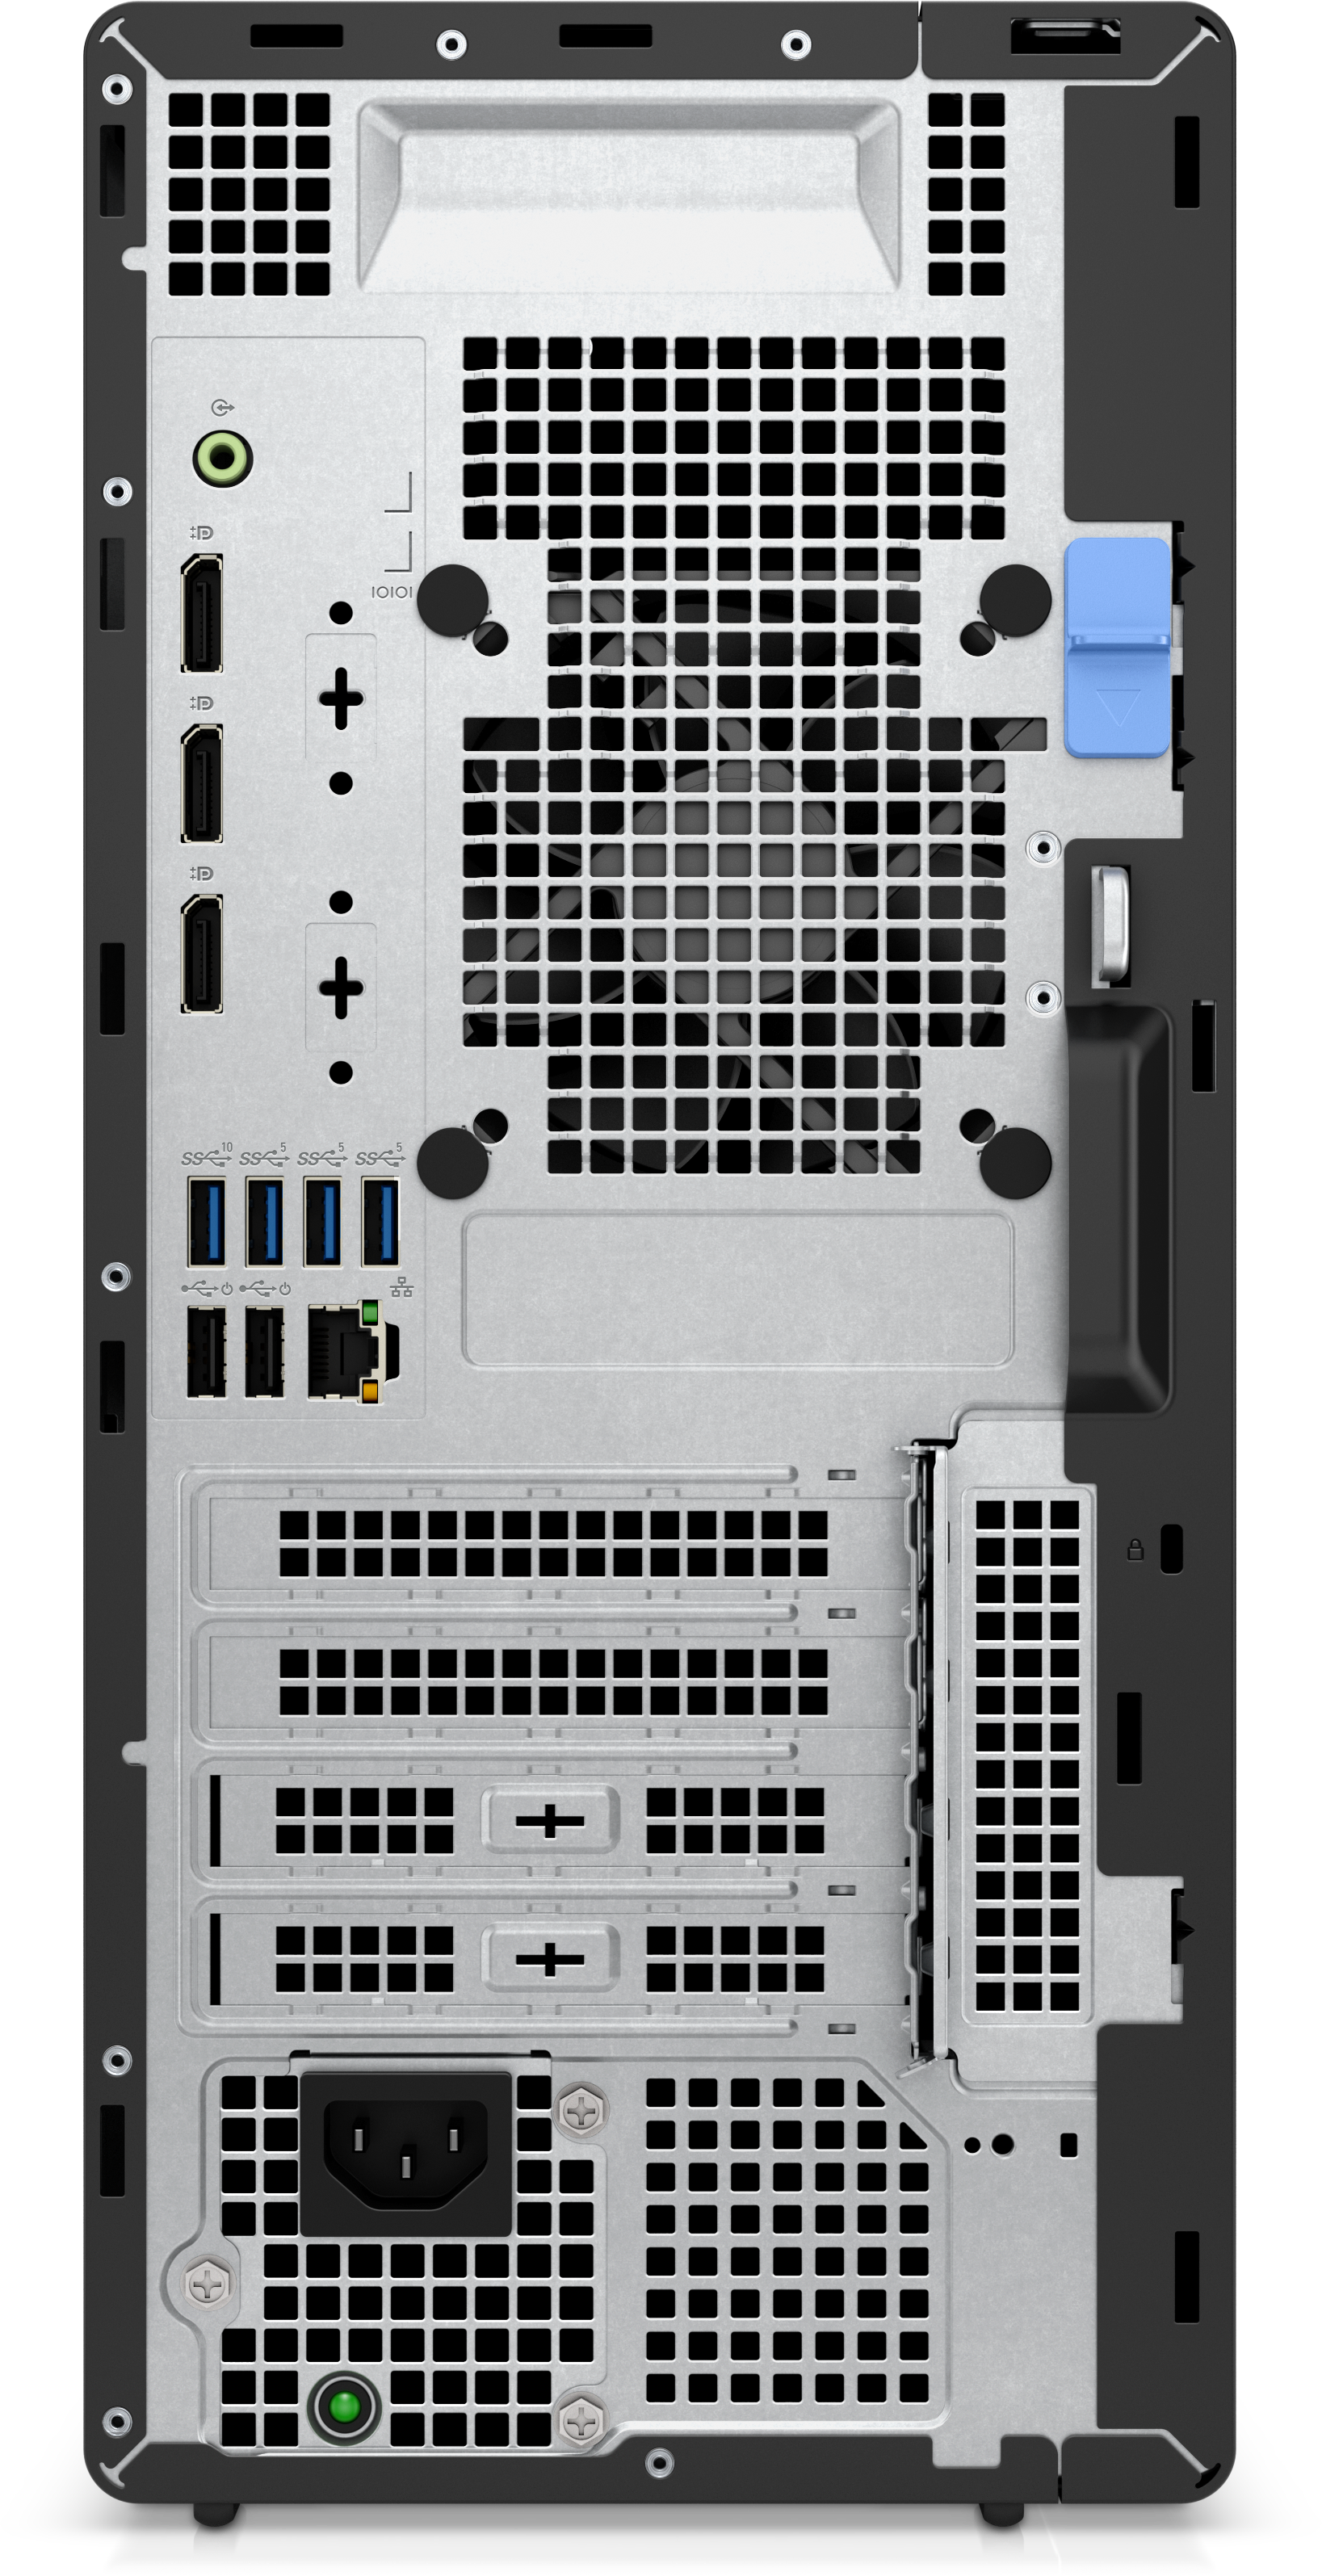 Dell OptiPlex Tower Plus 7010 - Benson Computers